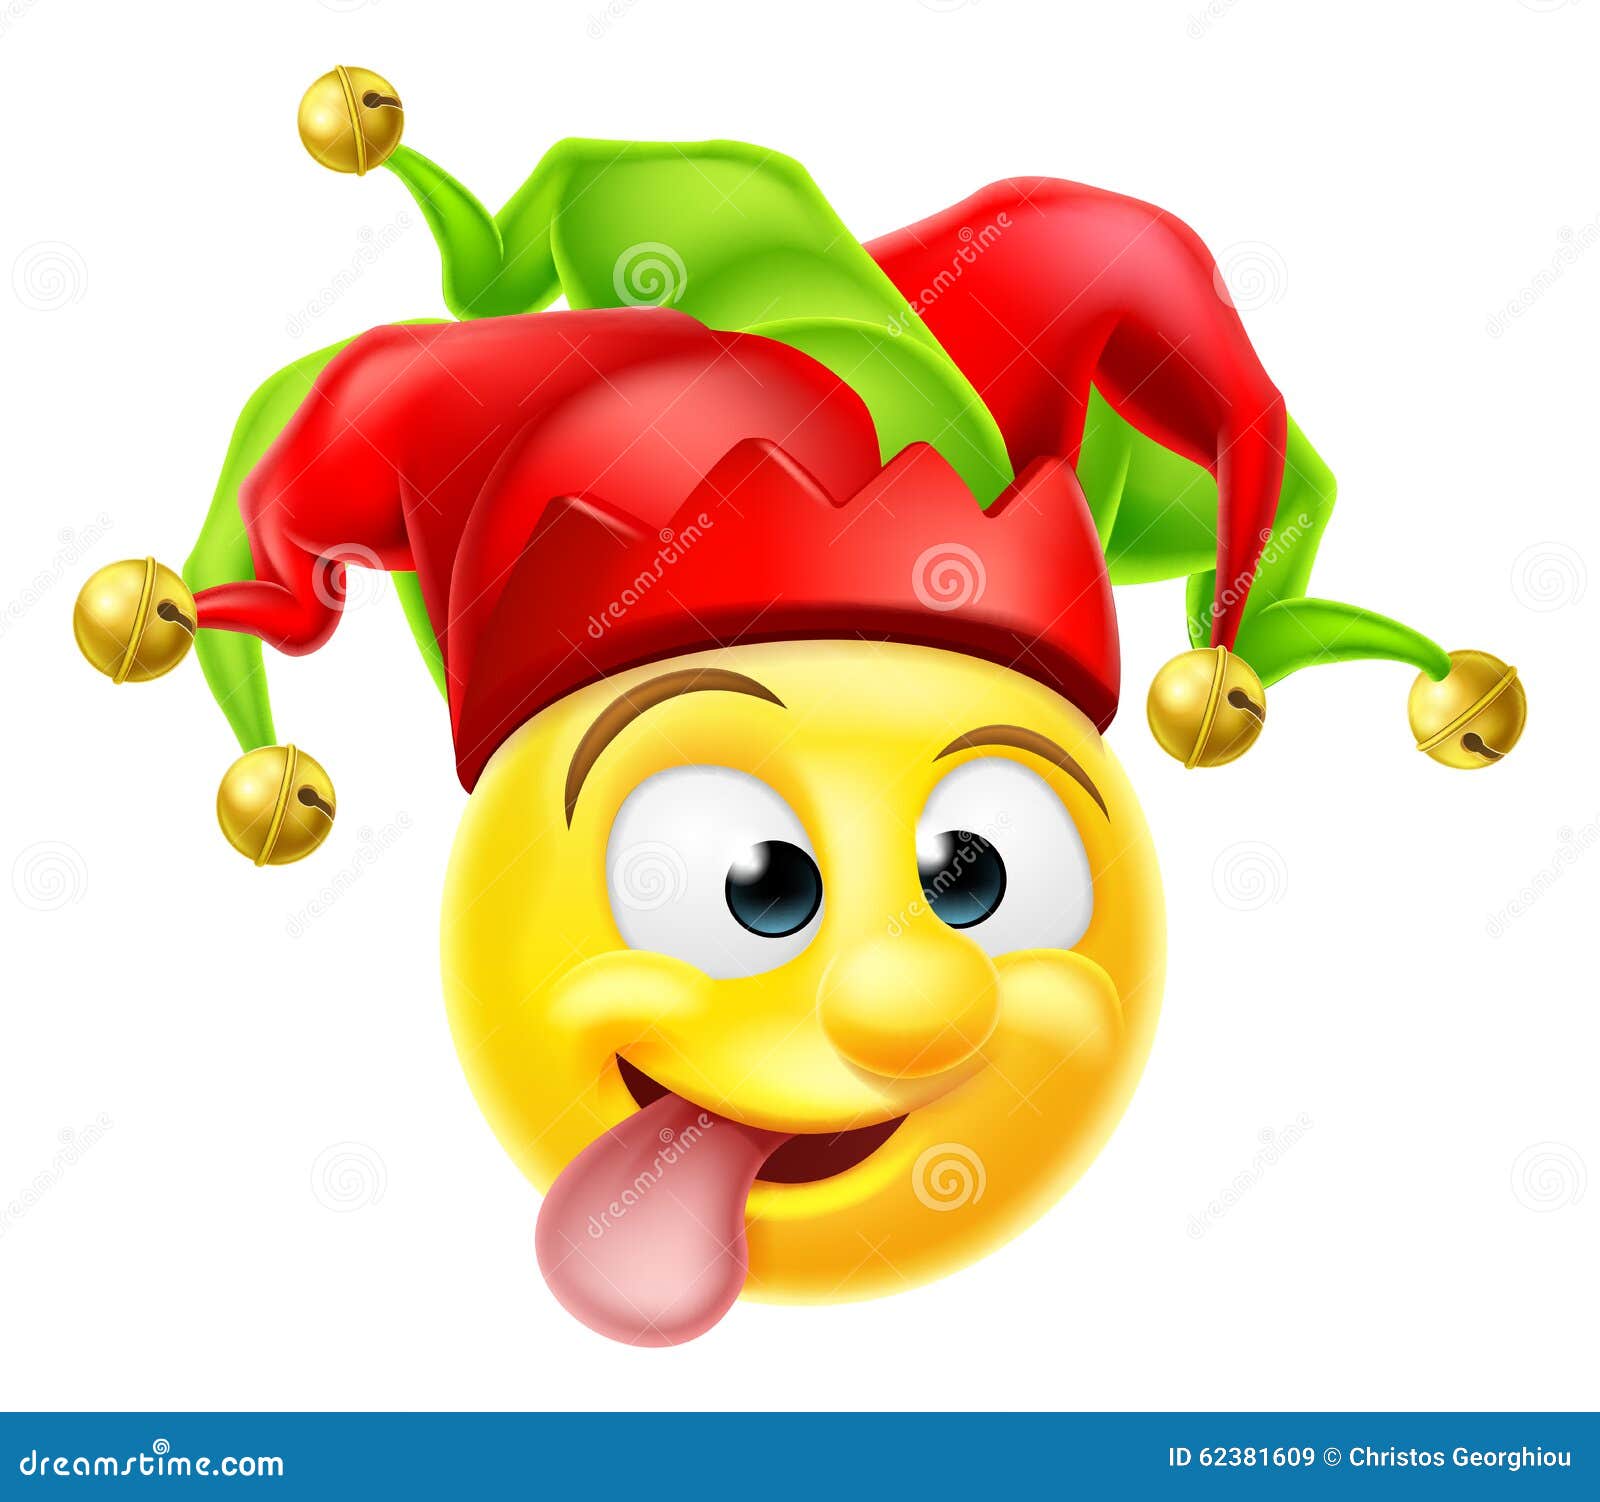 court-jester-emoji-emoticon-cartoon-clown-character-pulling-funny-face-62381609.jpg